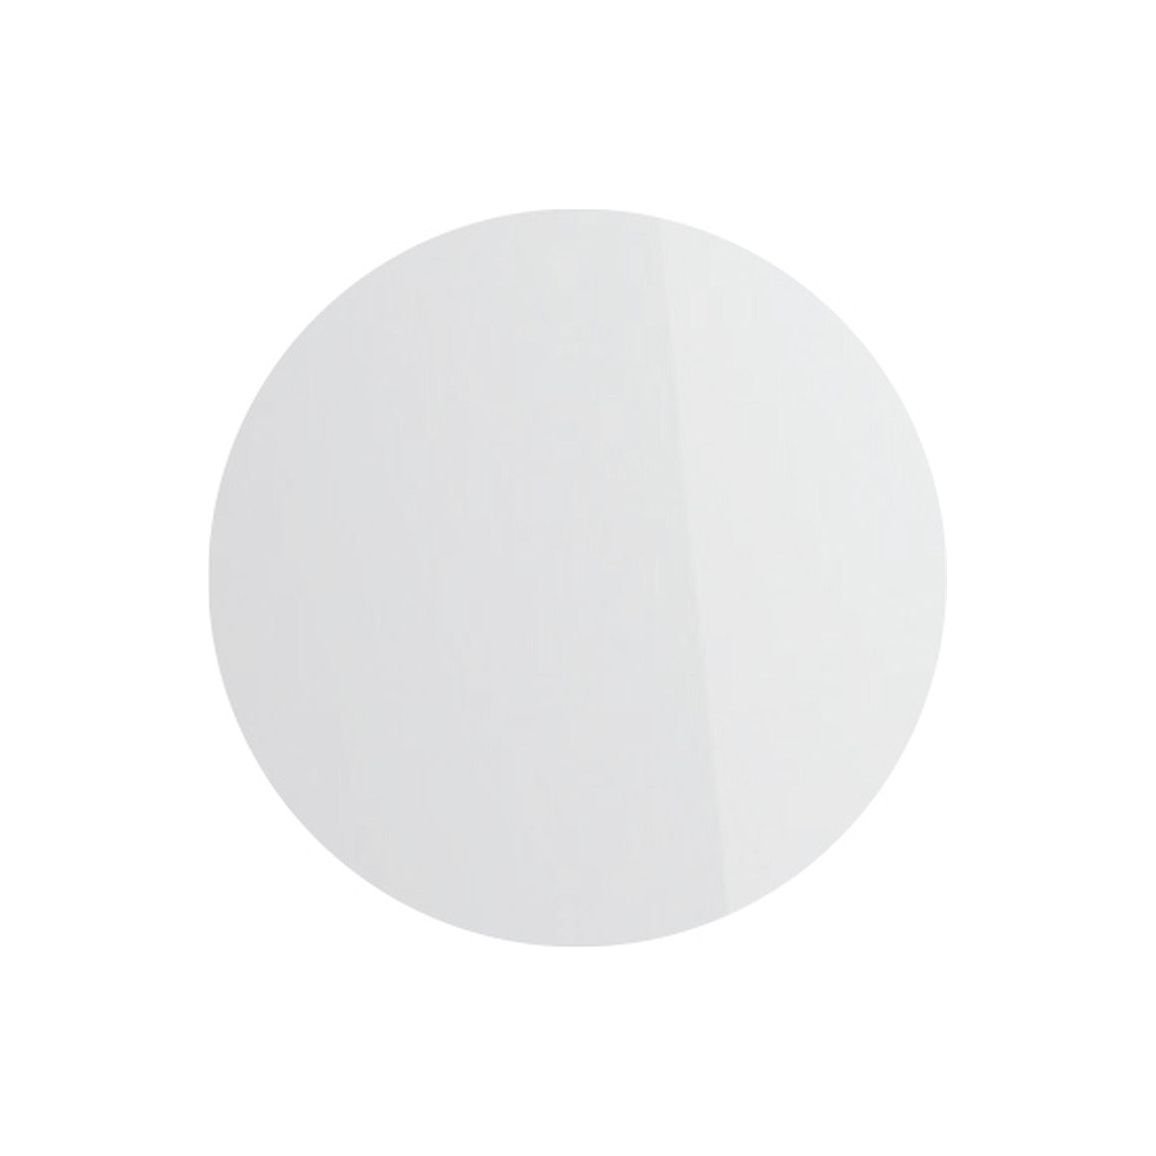 Cedar 2400x150mm Plinth - White Gloss